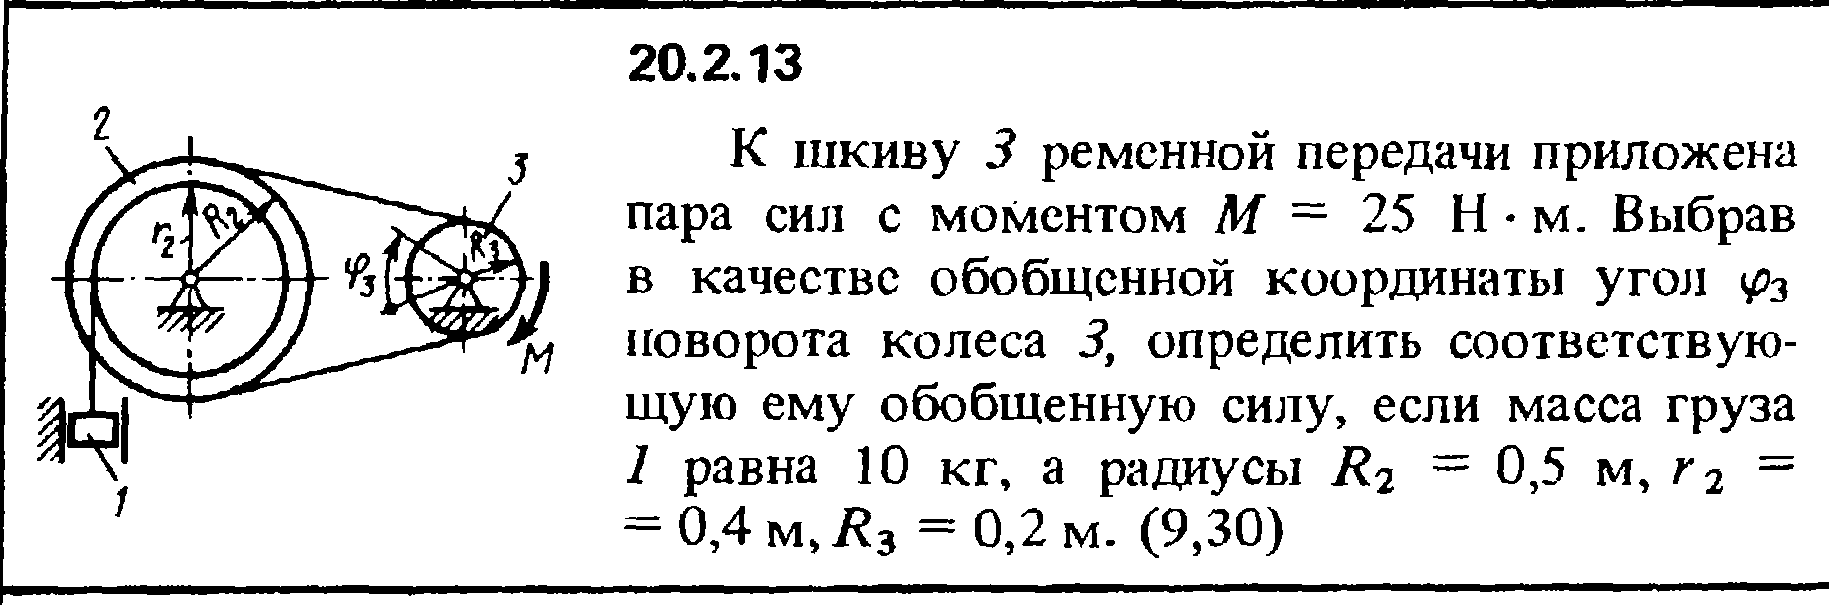 Решение 20.2.13 из сборника (решебника) Кепе О.Е. 1989